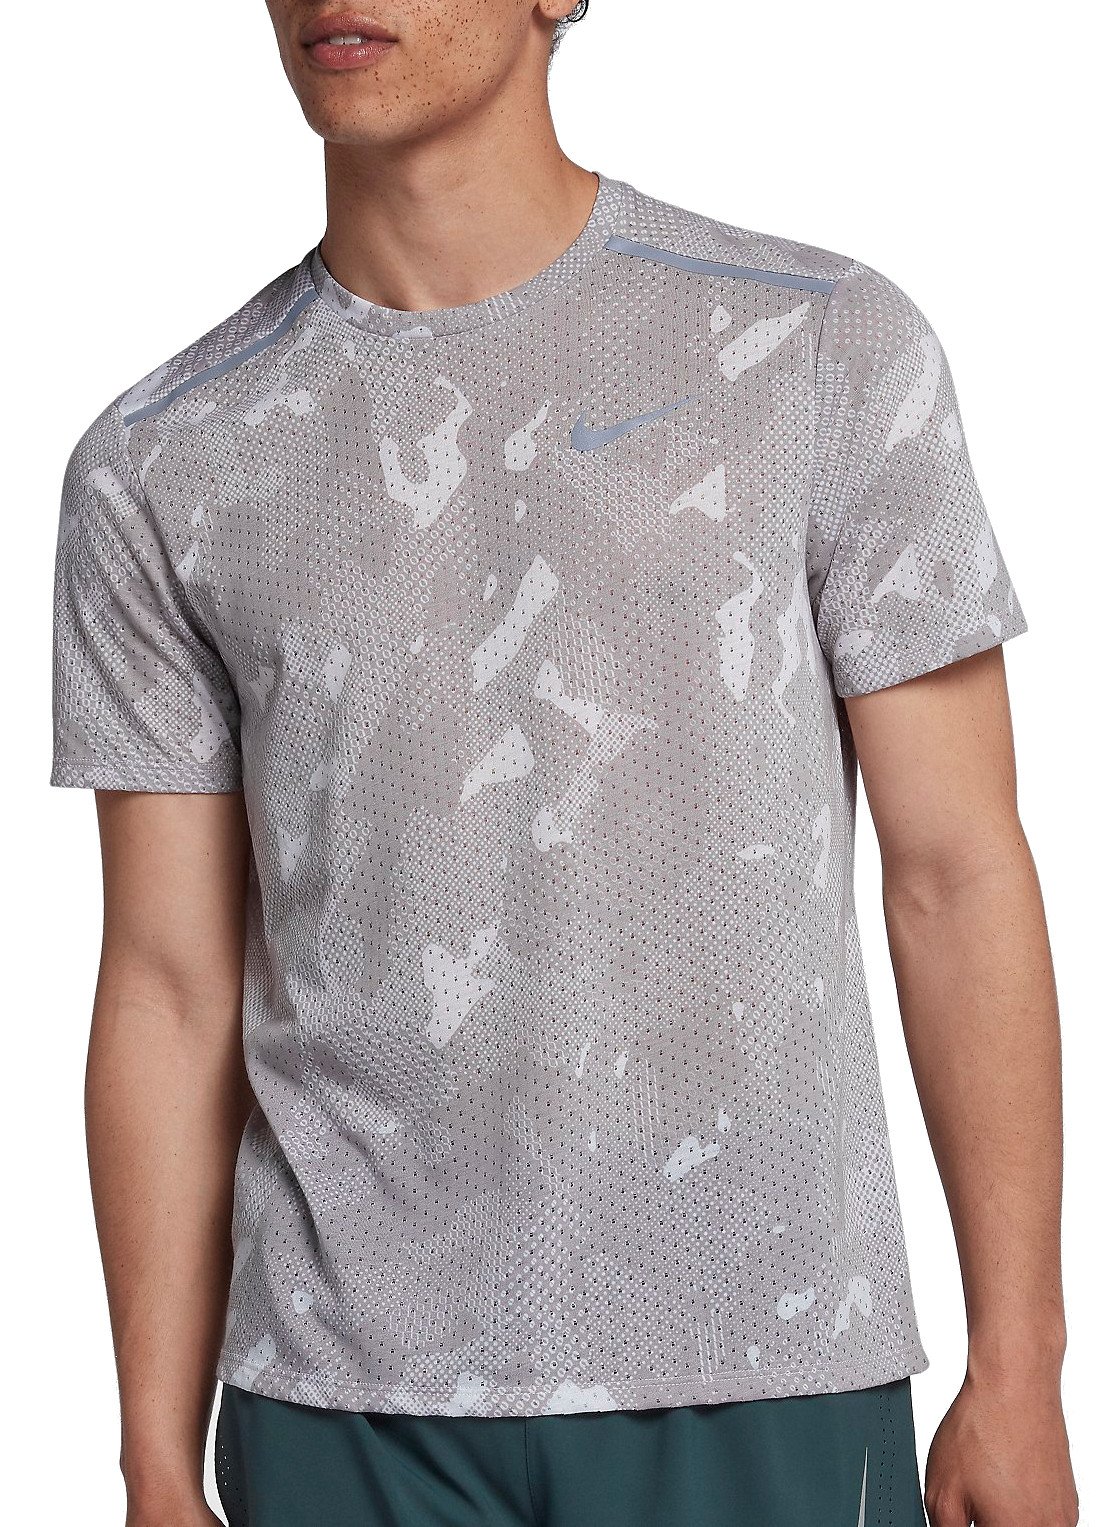 T-shirt Nike M NK TAILWIND TOP SS PR